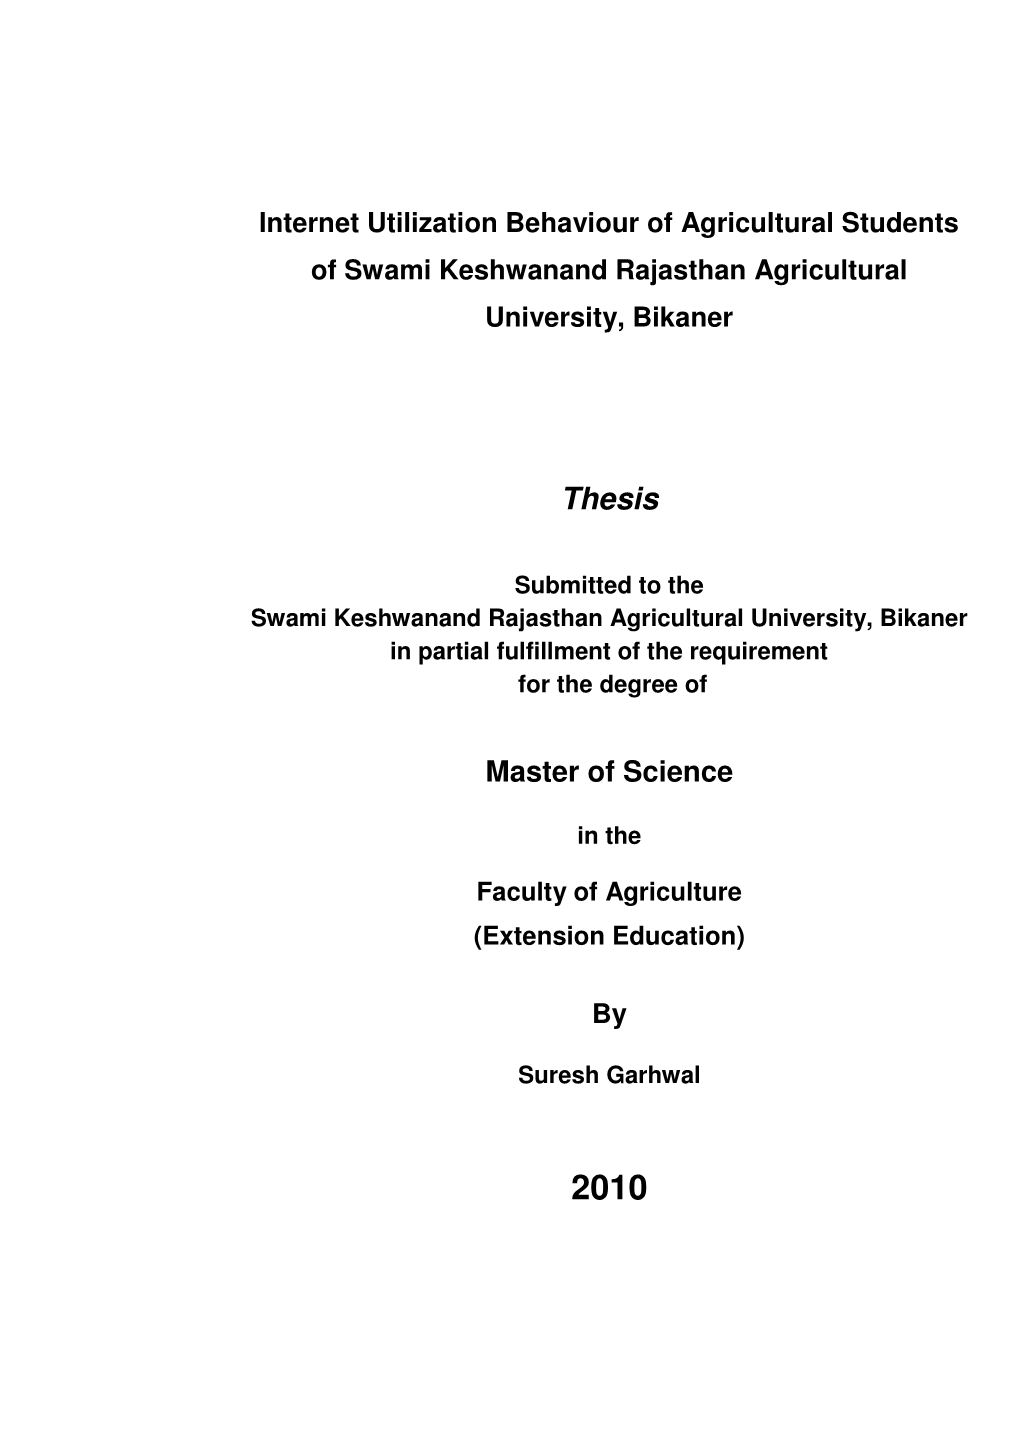 Internet Utilization Behaviour of Agricultural Students of Swami Keshwanand Rajasthan Agricultural University, Bikaner